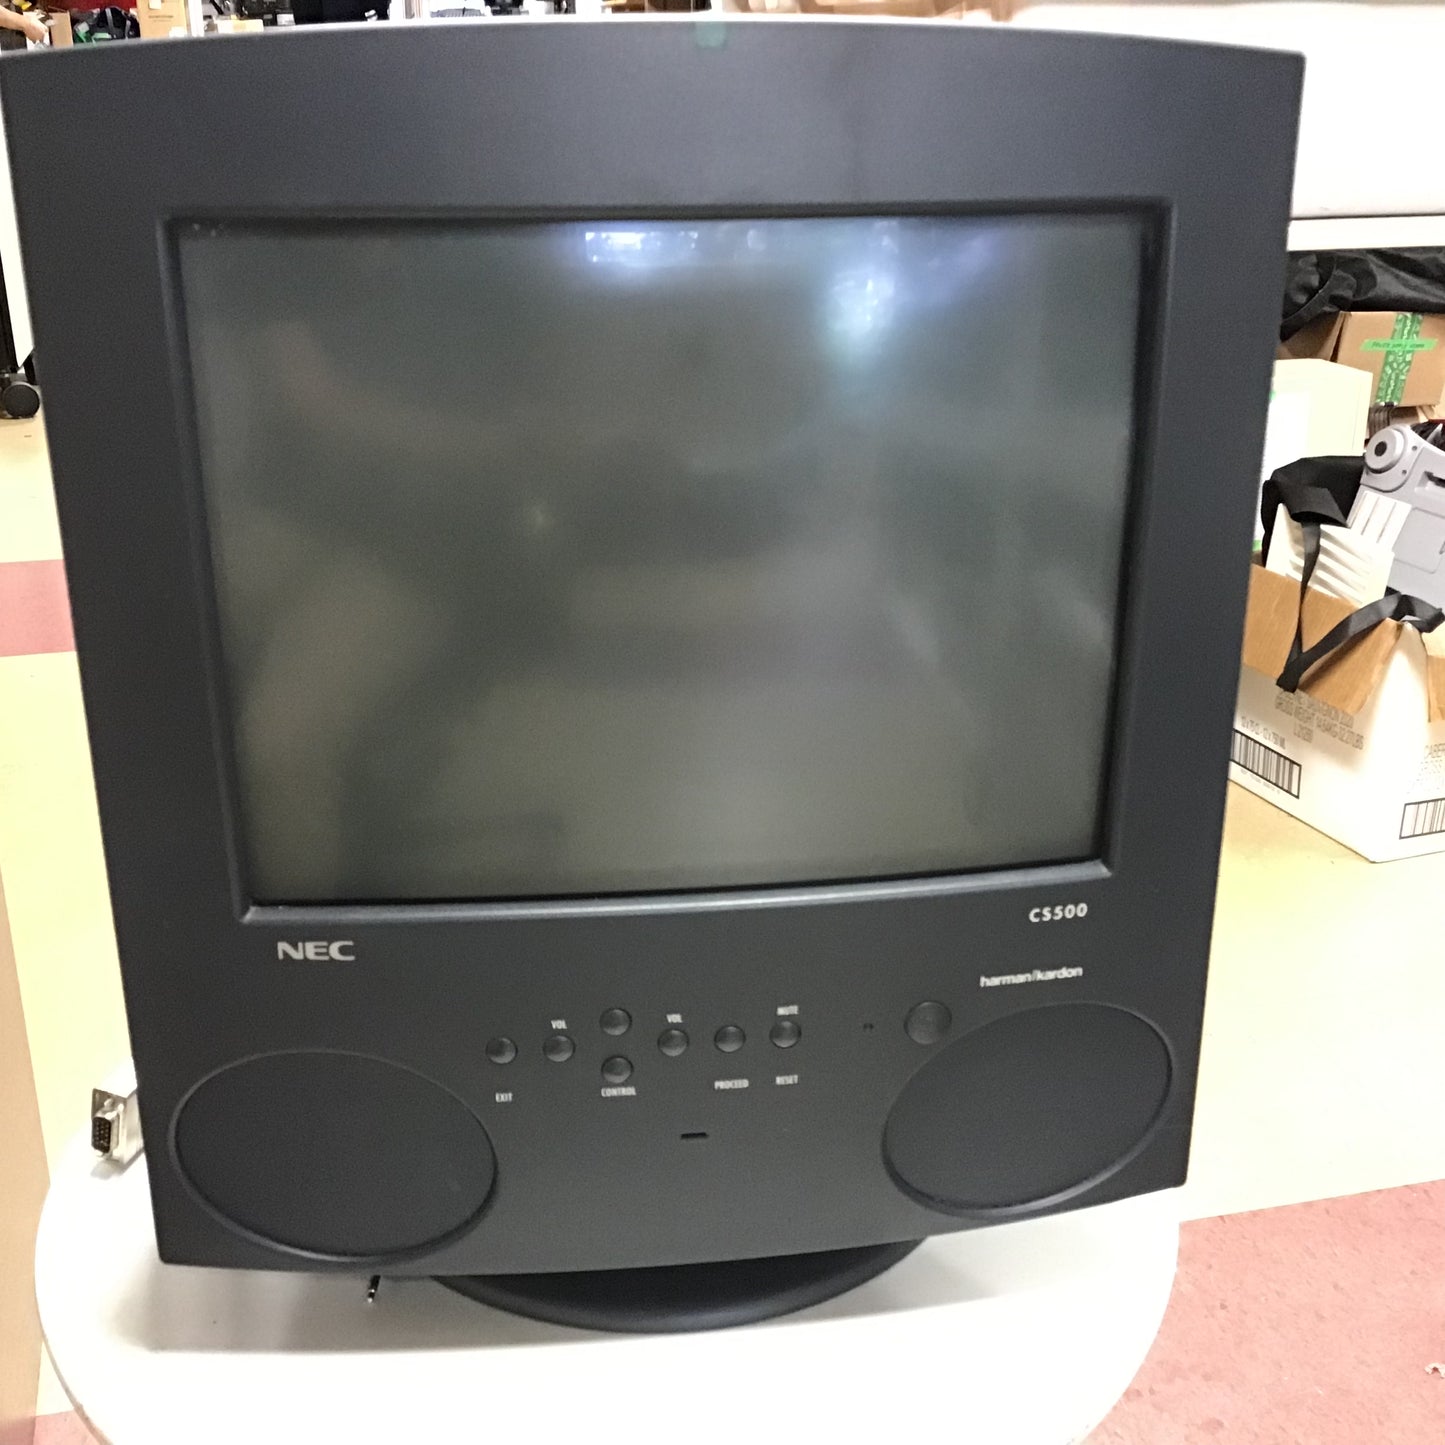 NEC C5500 CRT Monitor